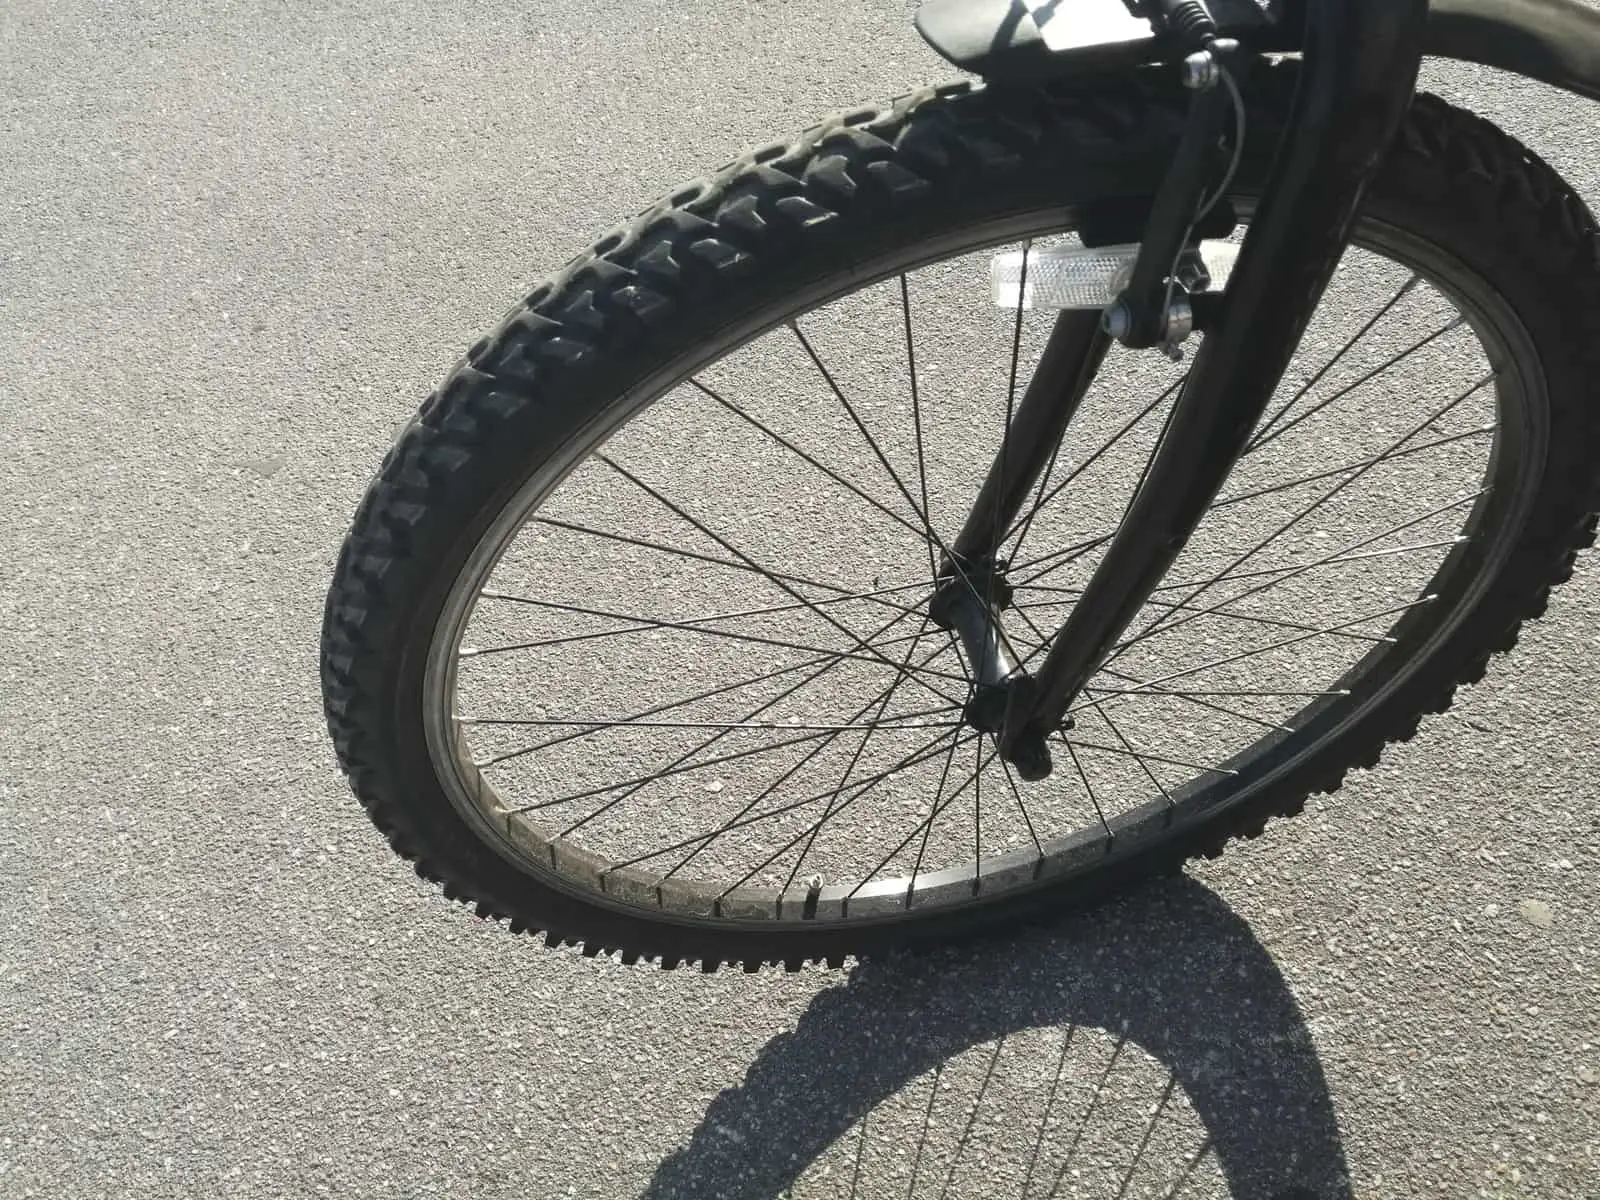 How much air pressure should be in a bike tire